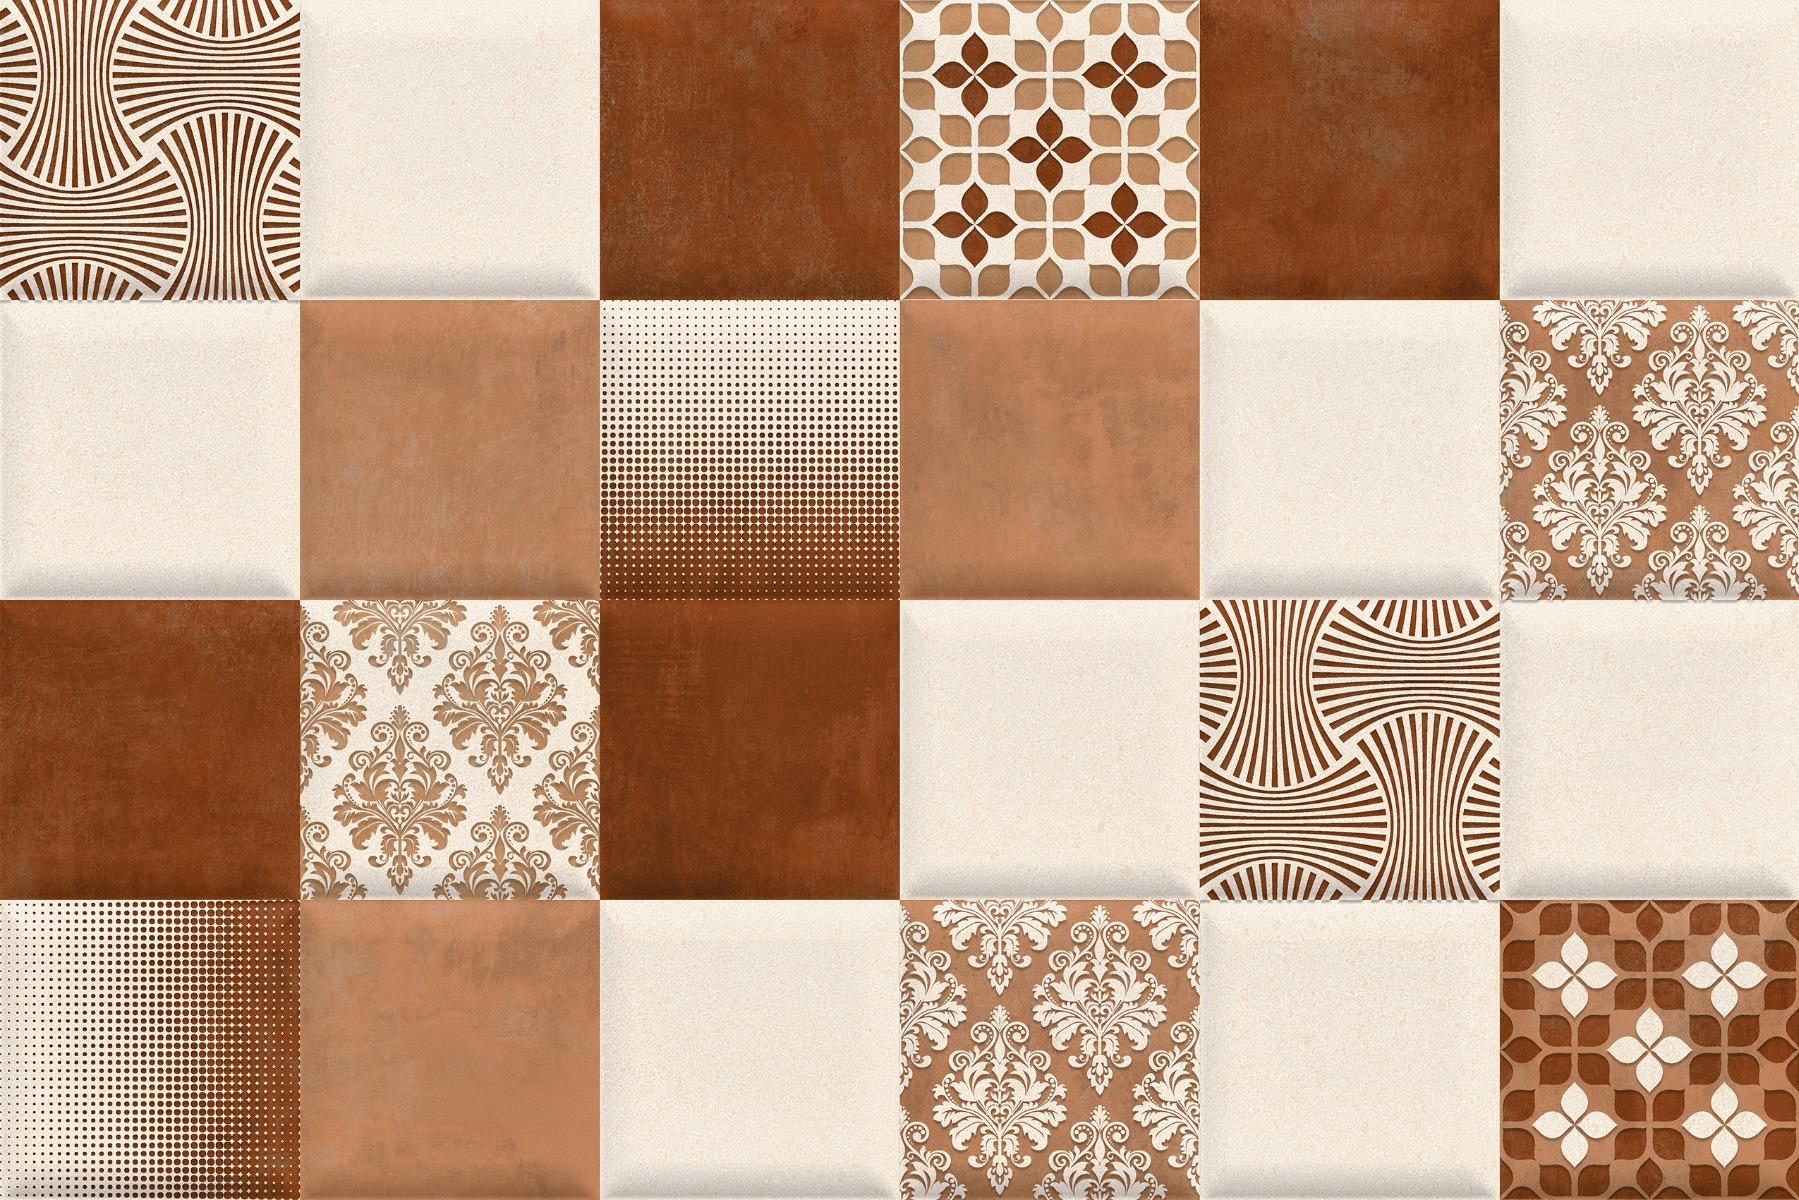 All Tiles for Bathroom Tiles, Kitchen Tiles, Accent Tiles, Dining Room Tiles